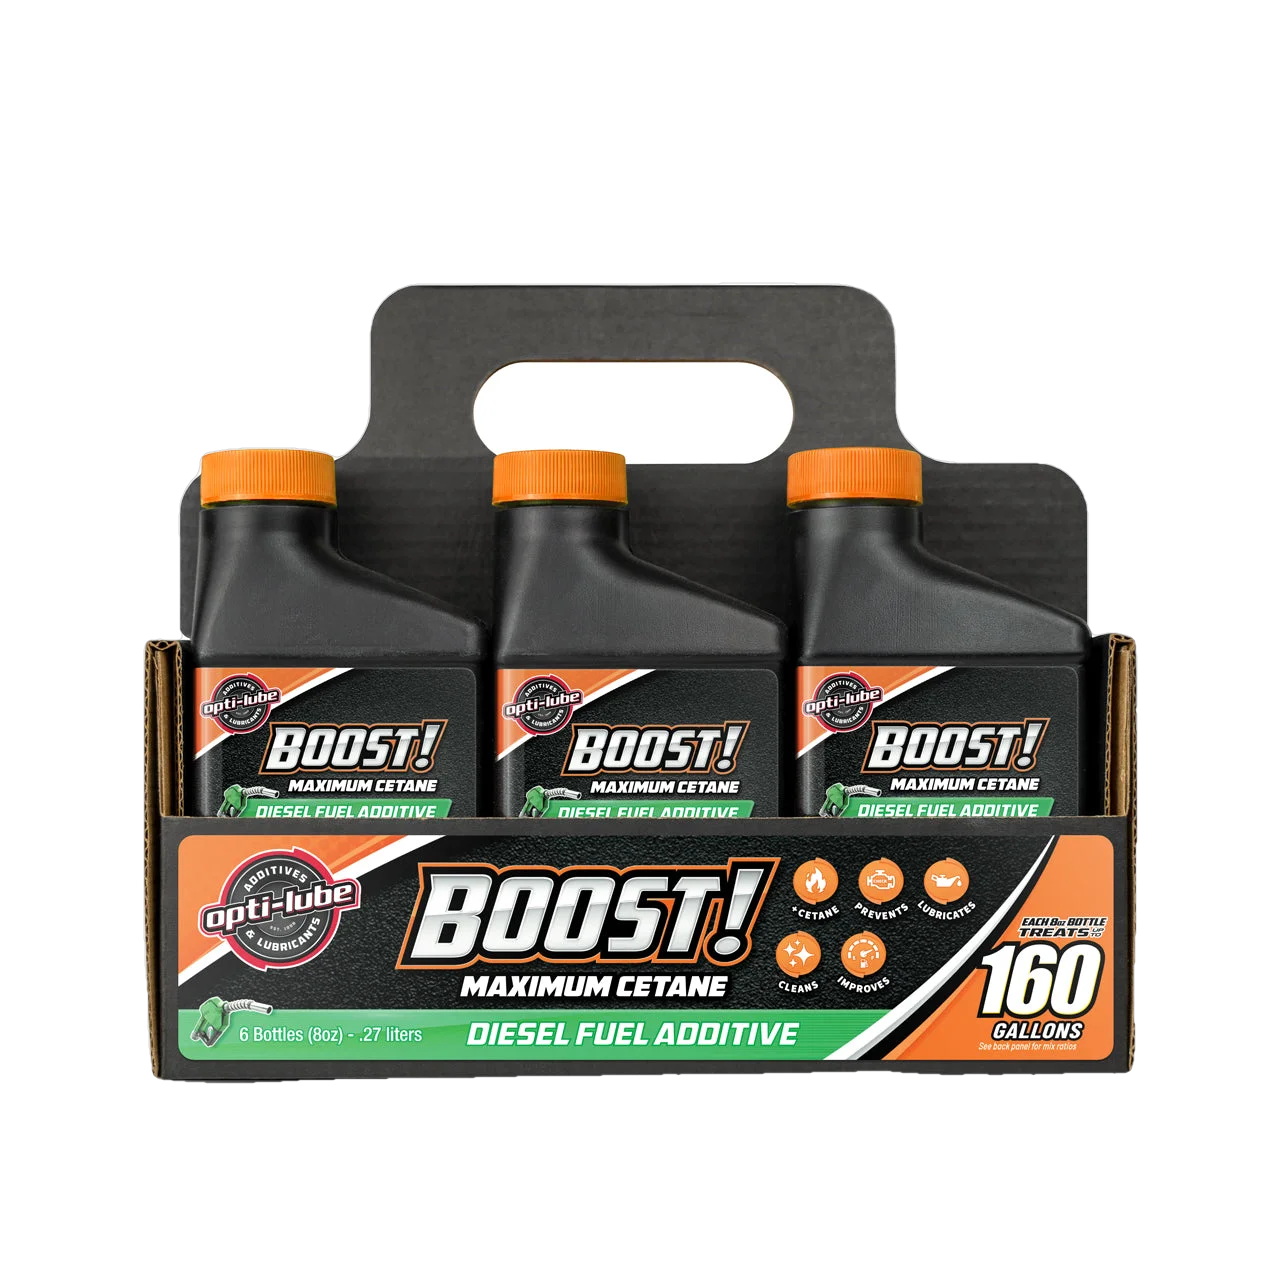 Opti-Lube Boost! Maximum Cetane Formula Diesel Fuel Additive: 8oz 6 Pack, Treats up to 160 Gallons per 8oz Bottle